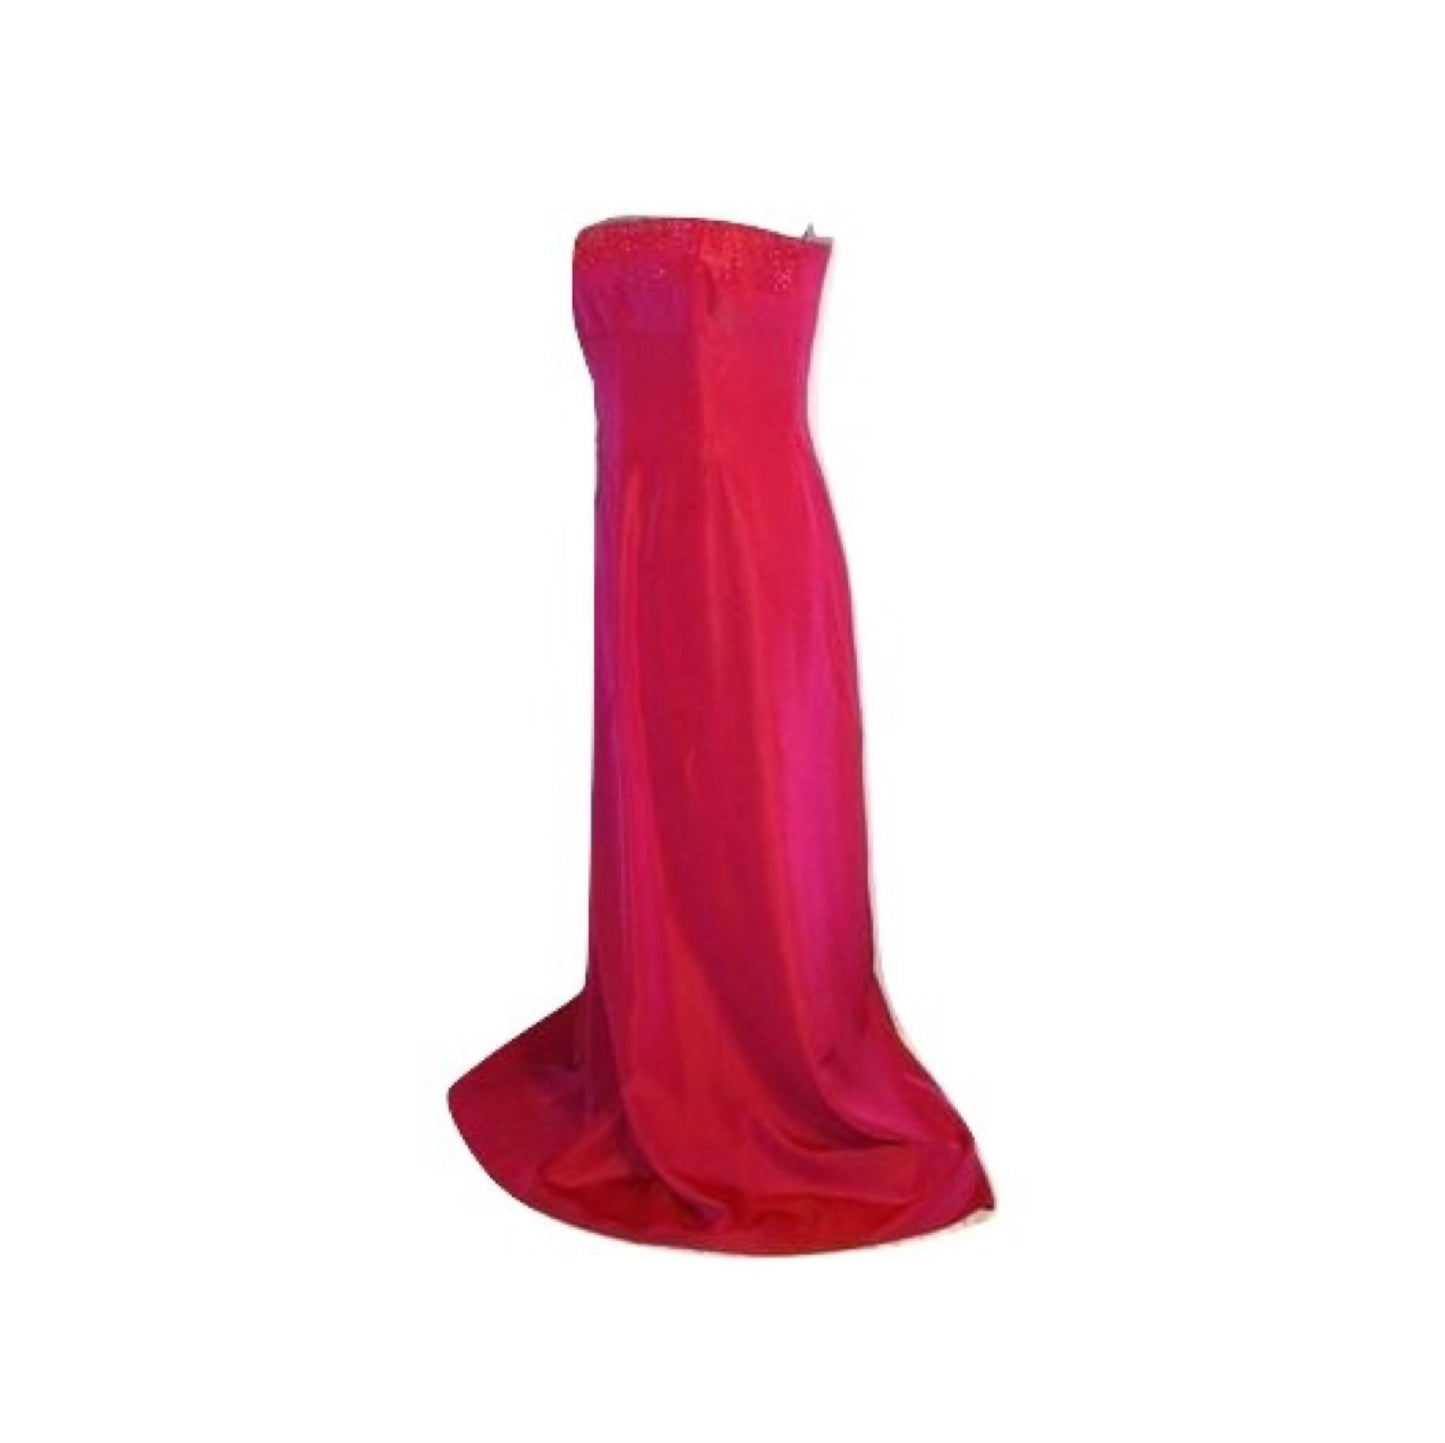 Laundry Beaded Pink Fuschia Irridescent Satin Bustier Gown Dress Medium 8